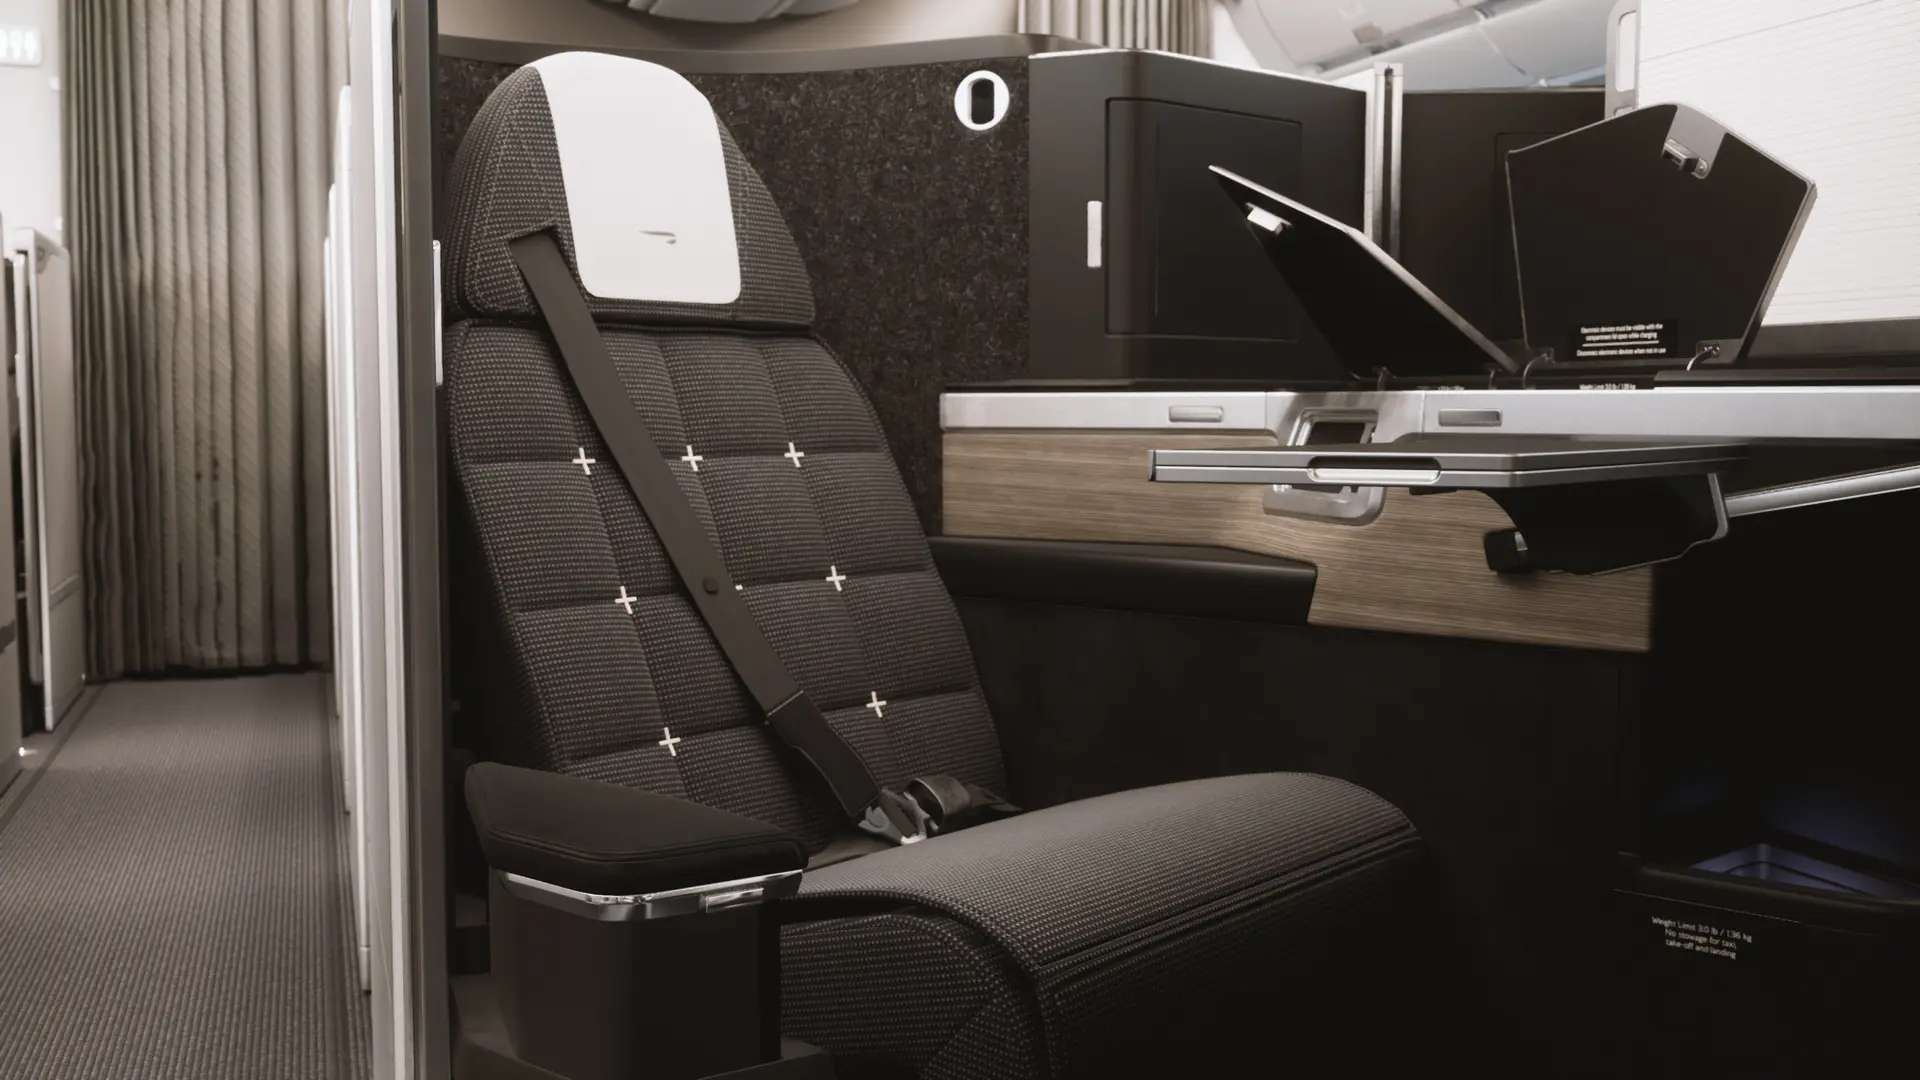 Airline review Cabin & Seat - British Airways - 2